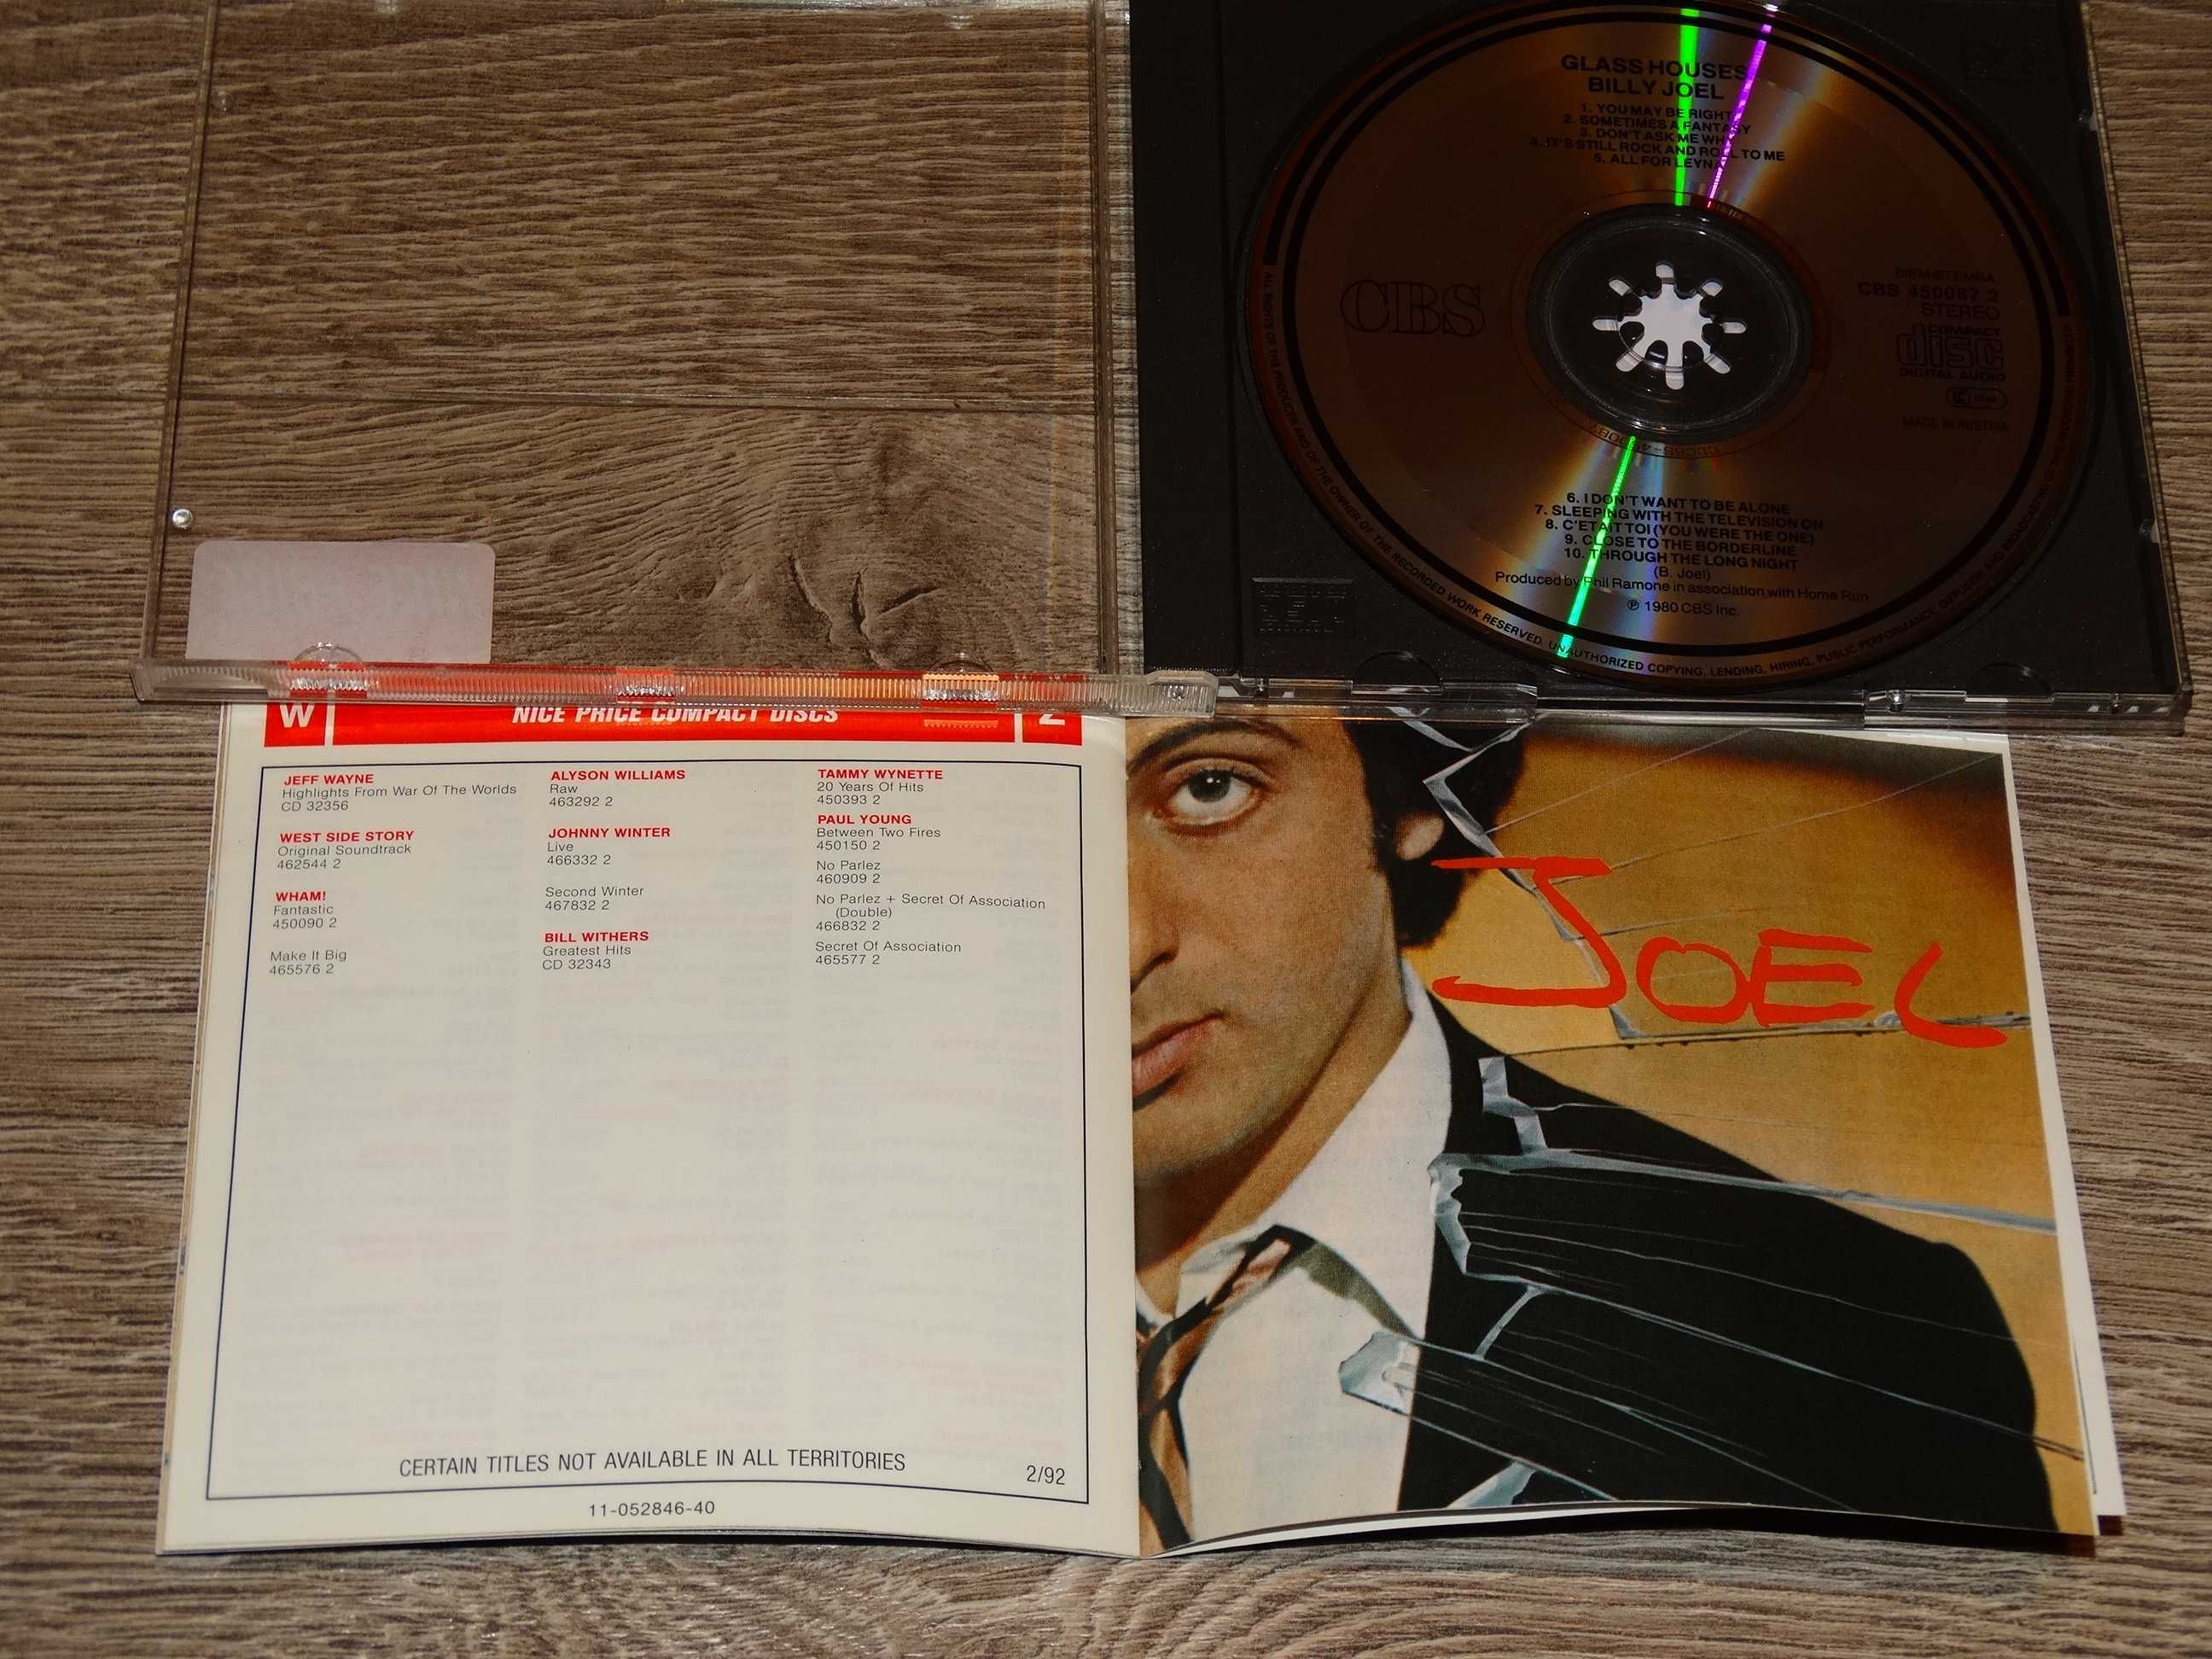 Billy Joel  Glass Houses CD